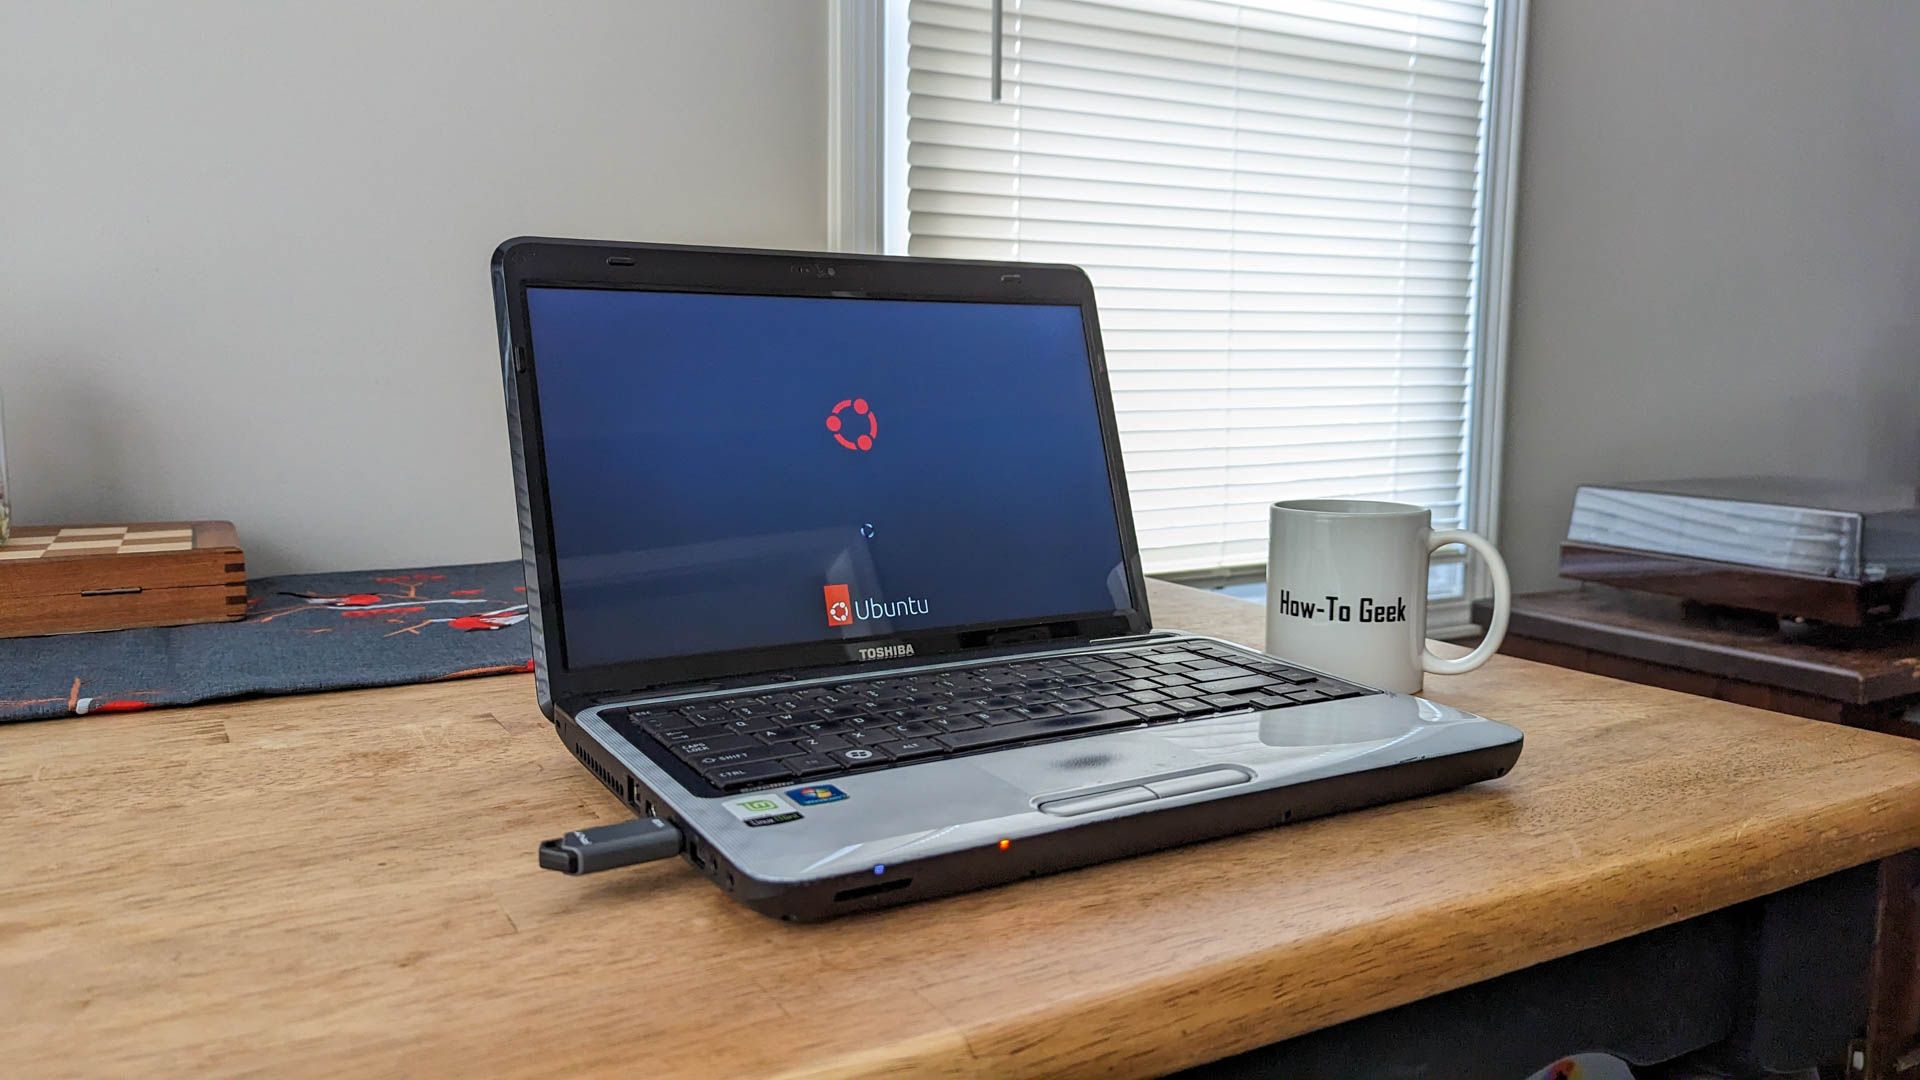 Ubuntu Linux start up screen on a laptop